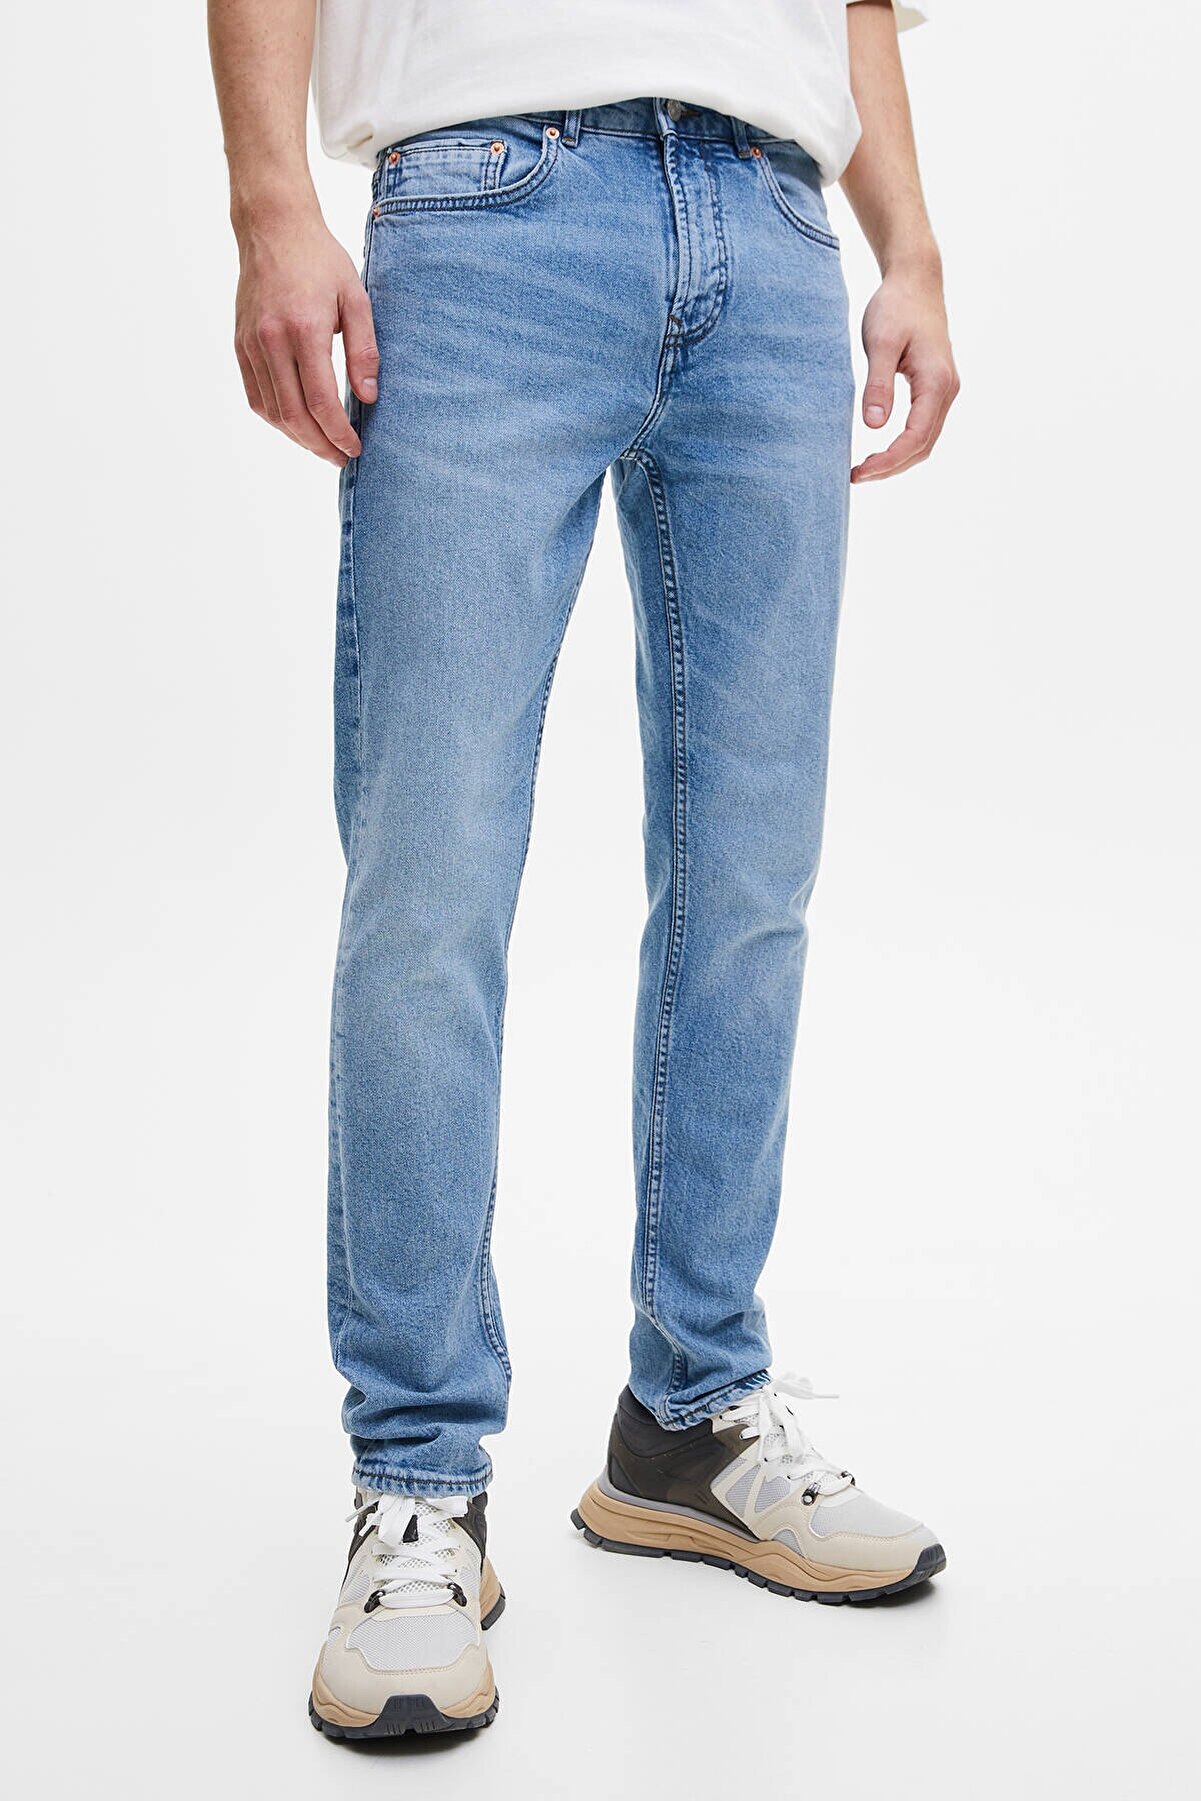 Pull & Bear Mavi Comfort Slim Fit Jean